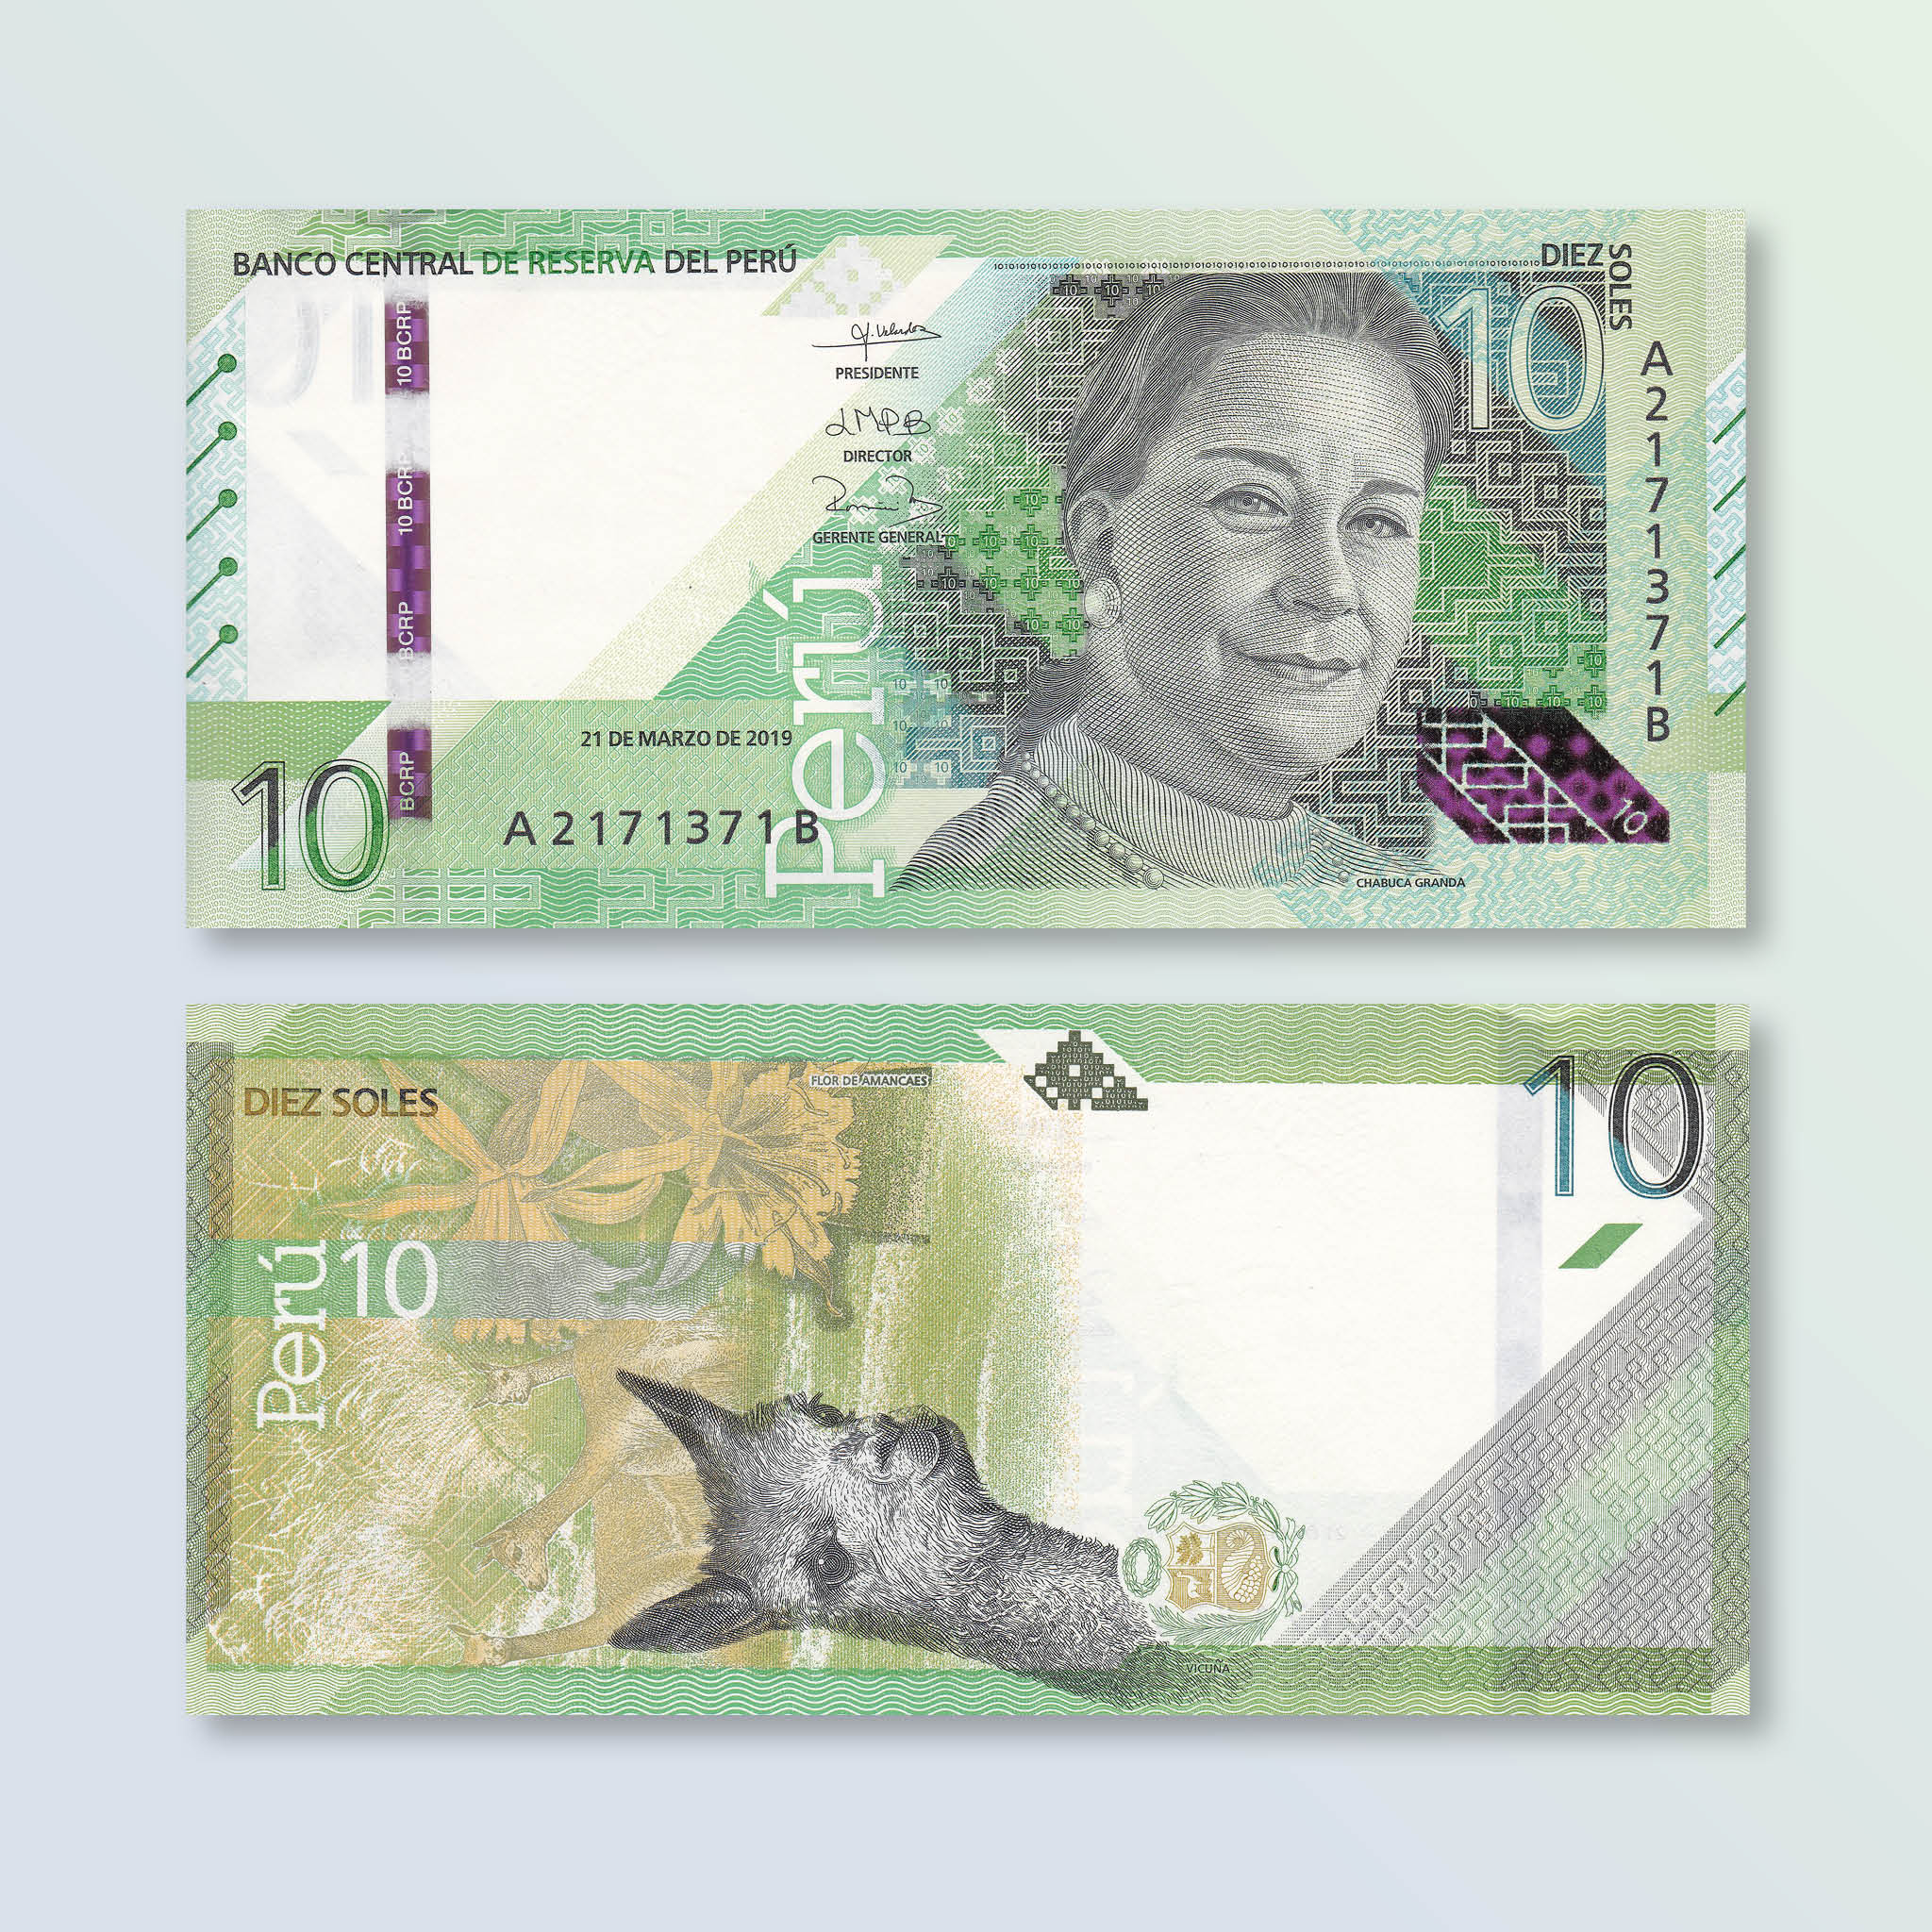 Peru 10 Soles, 2019 (2021), B537a, UNC - Robert's World Money - World Banknotes